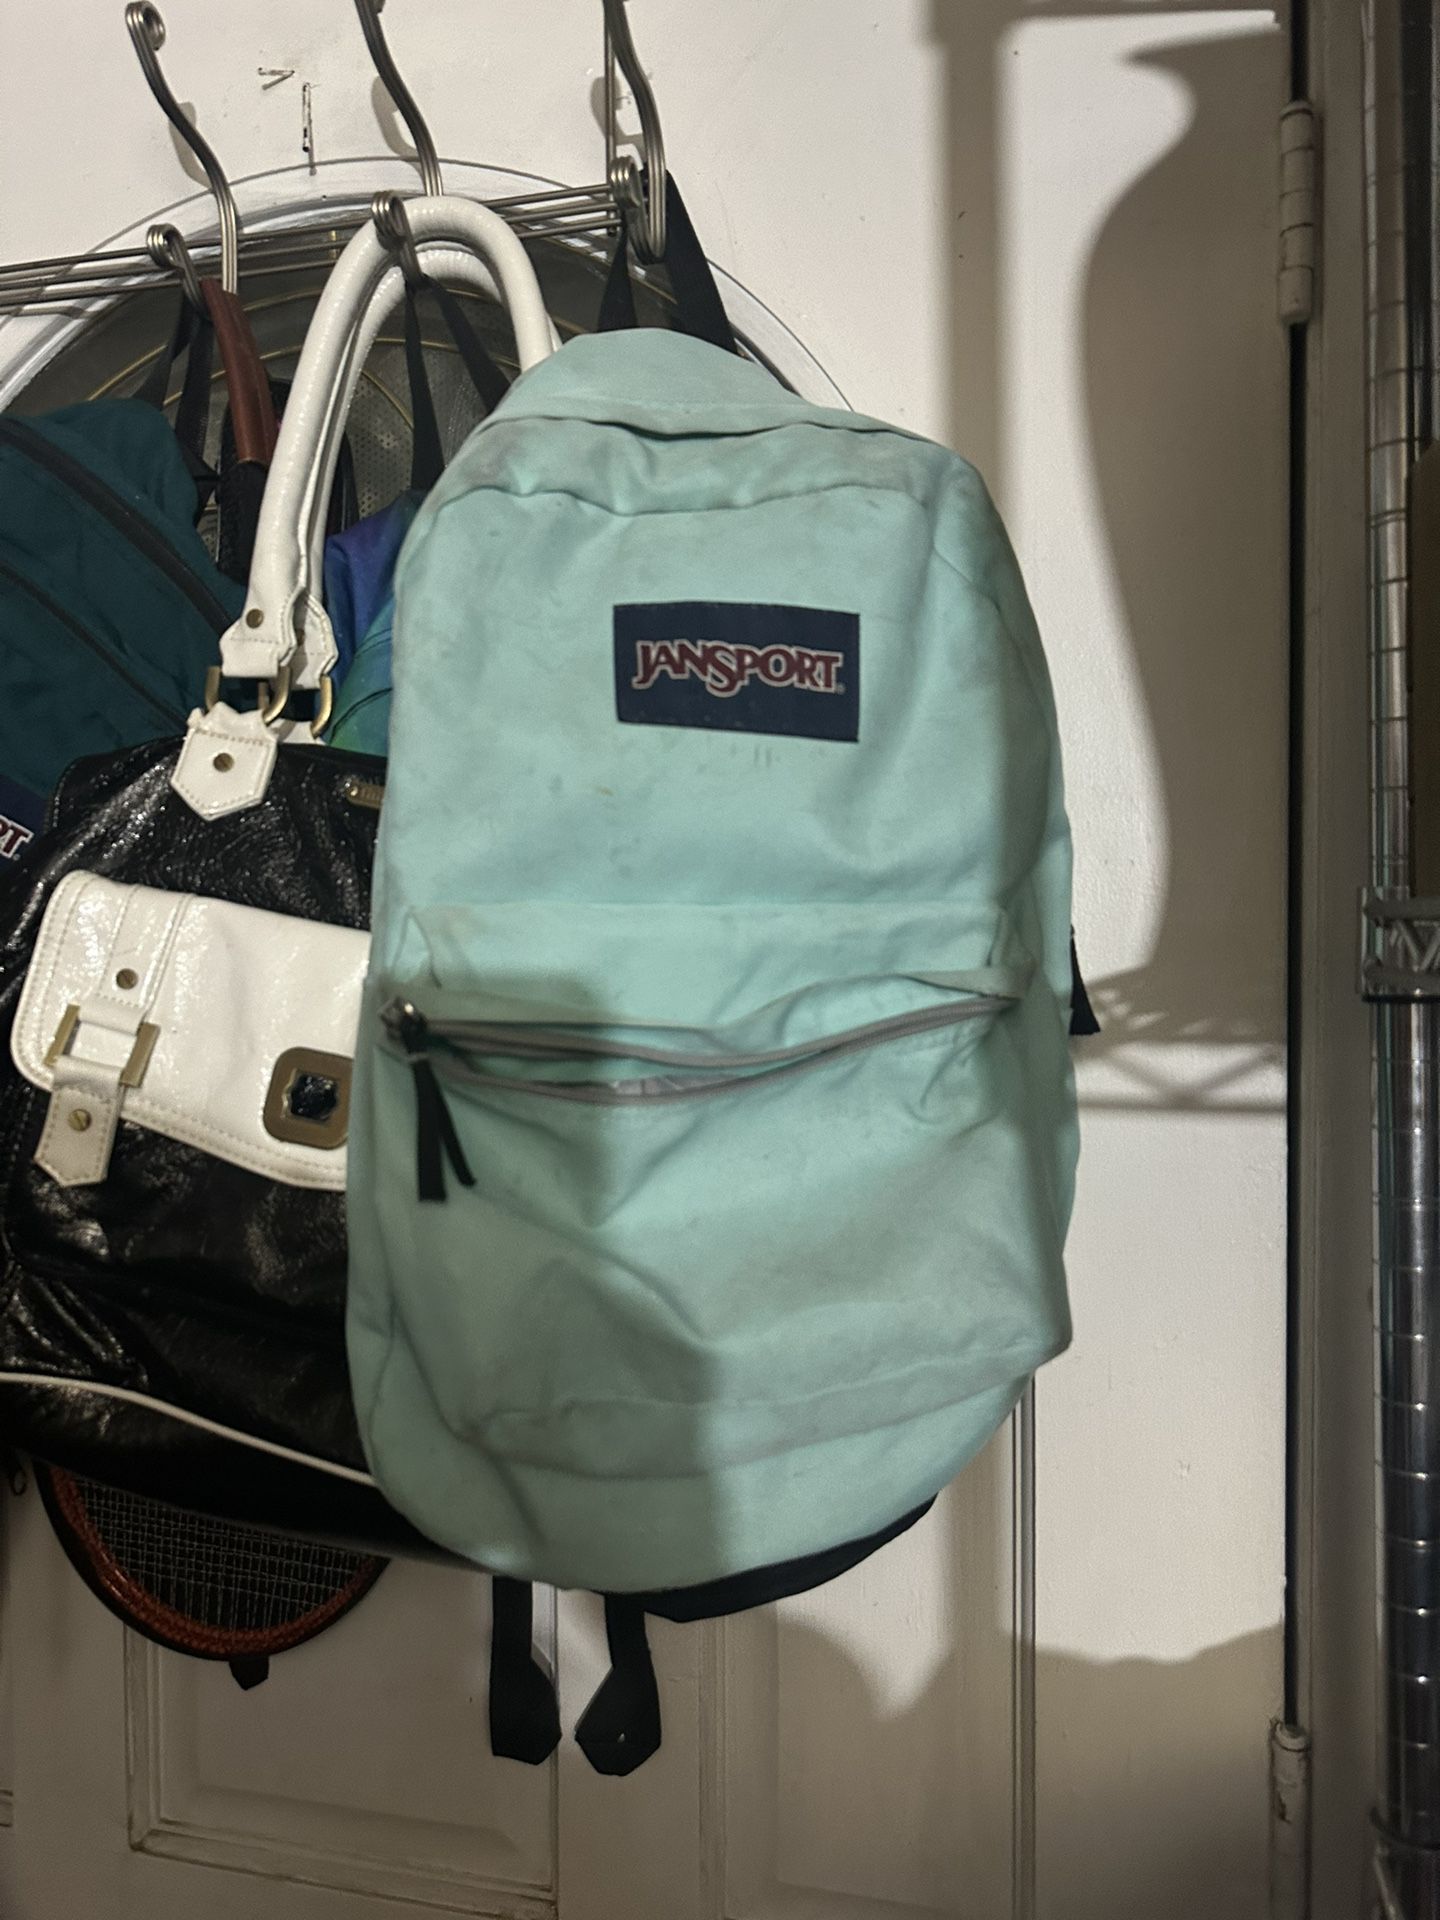 Danport backpack $10 each